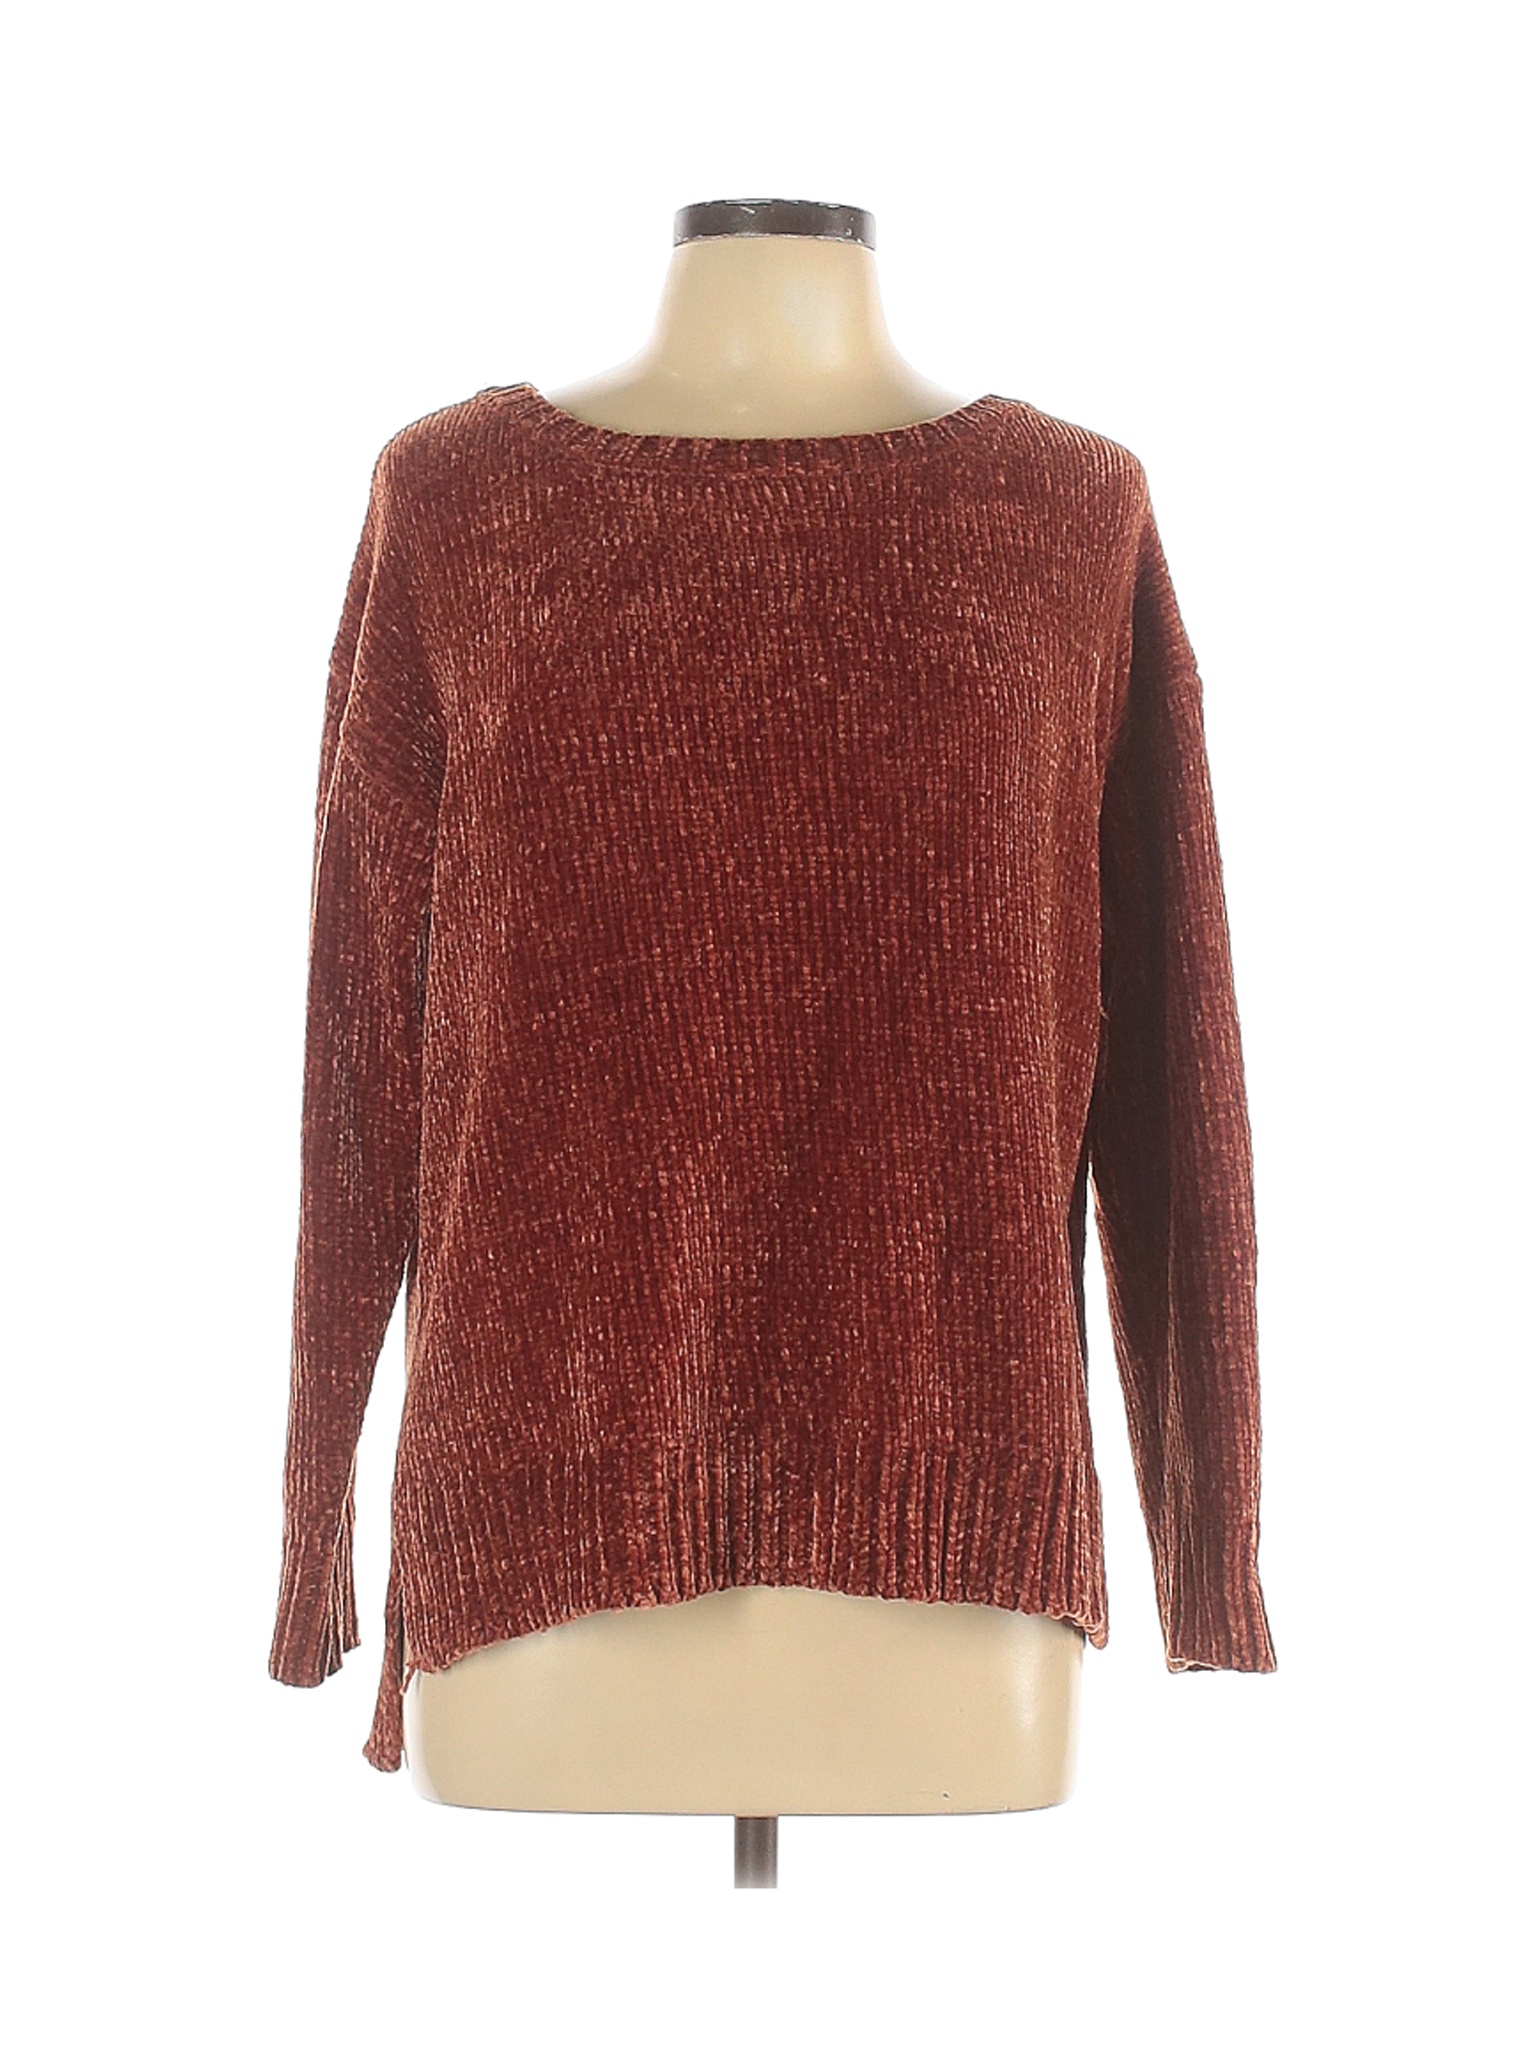 Jones New York Signature Women Brown Pullover Sweater L | eBay